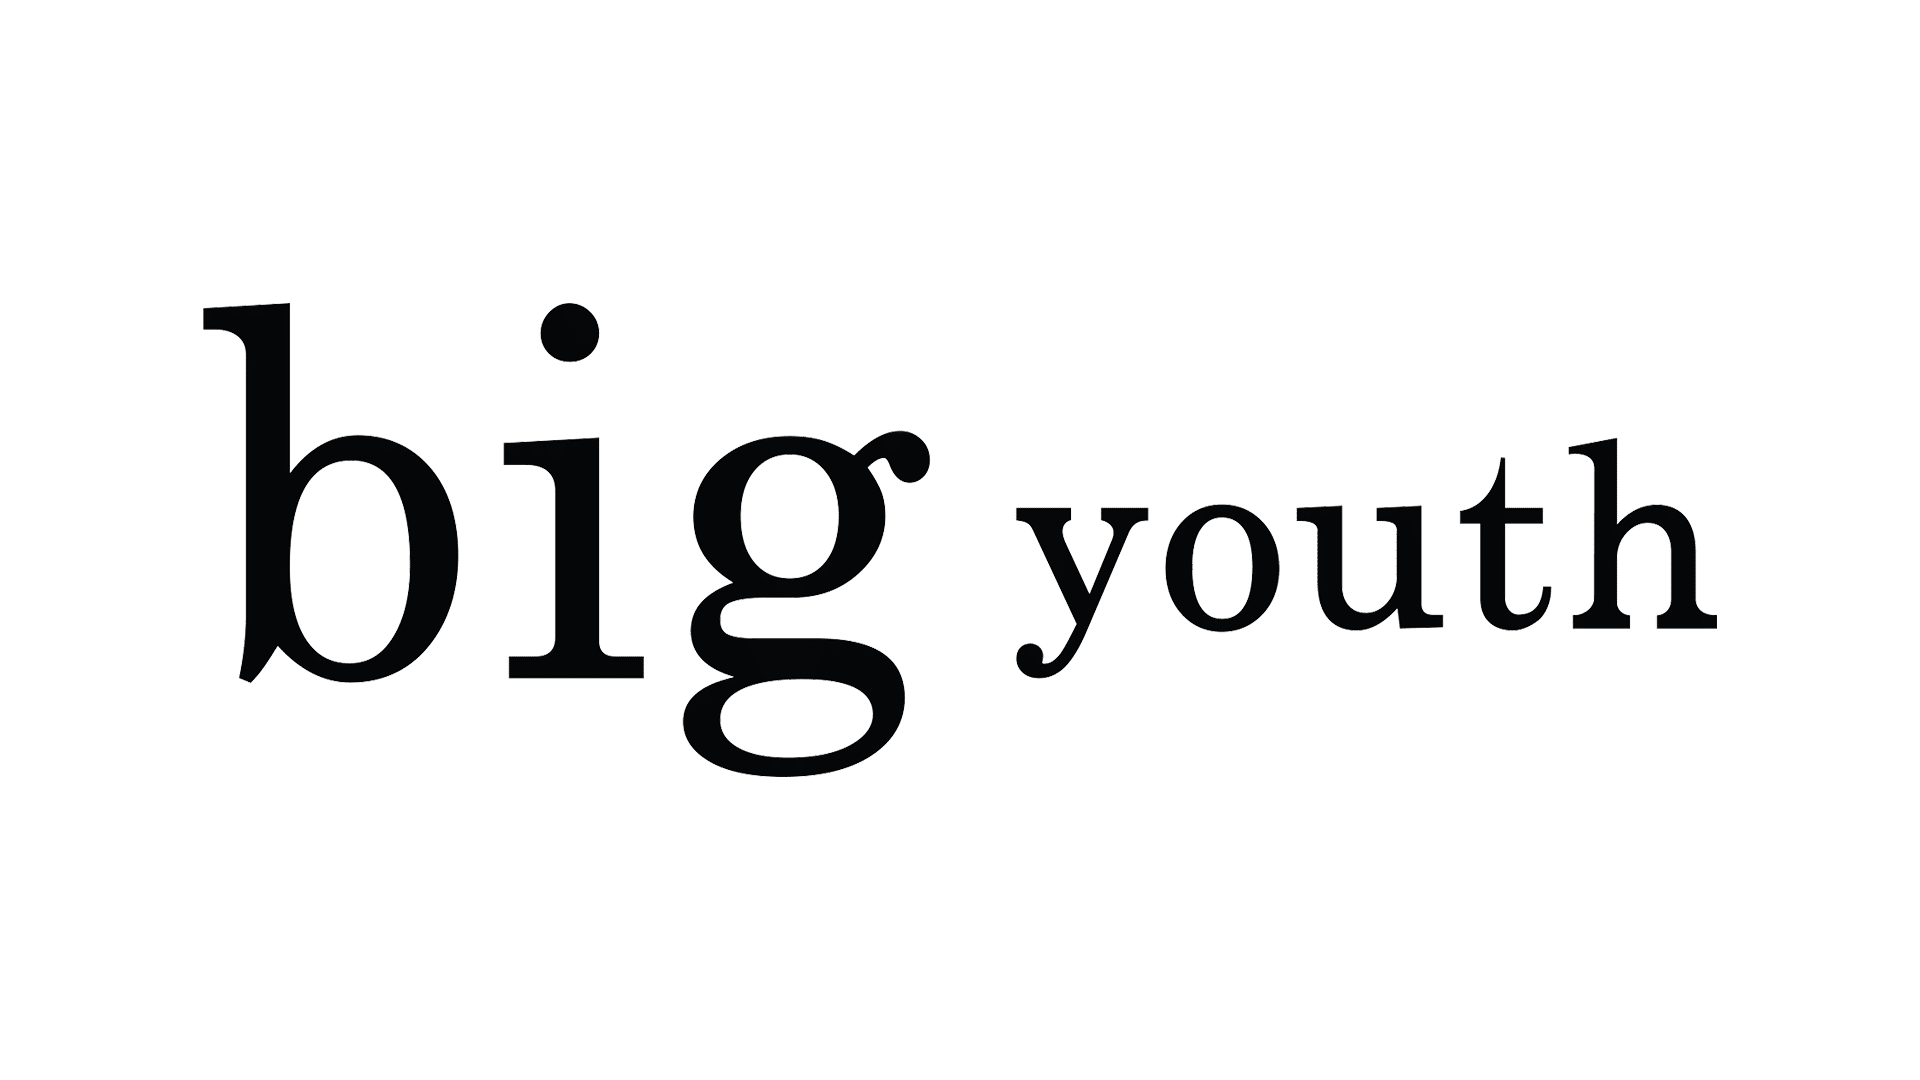 logobig youth1599666176 - Entreprise de nettoyage paris 5 - [Hnet]